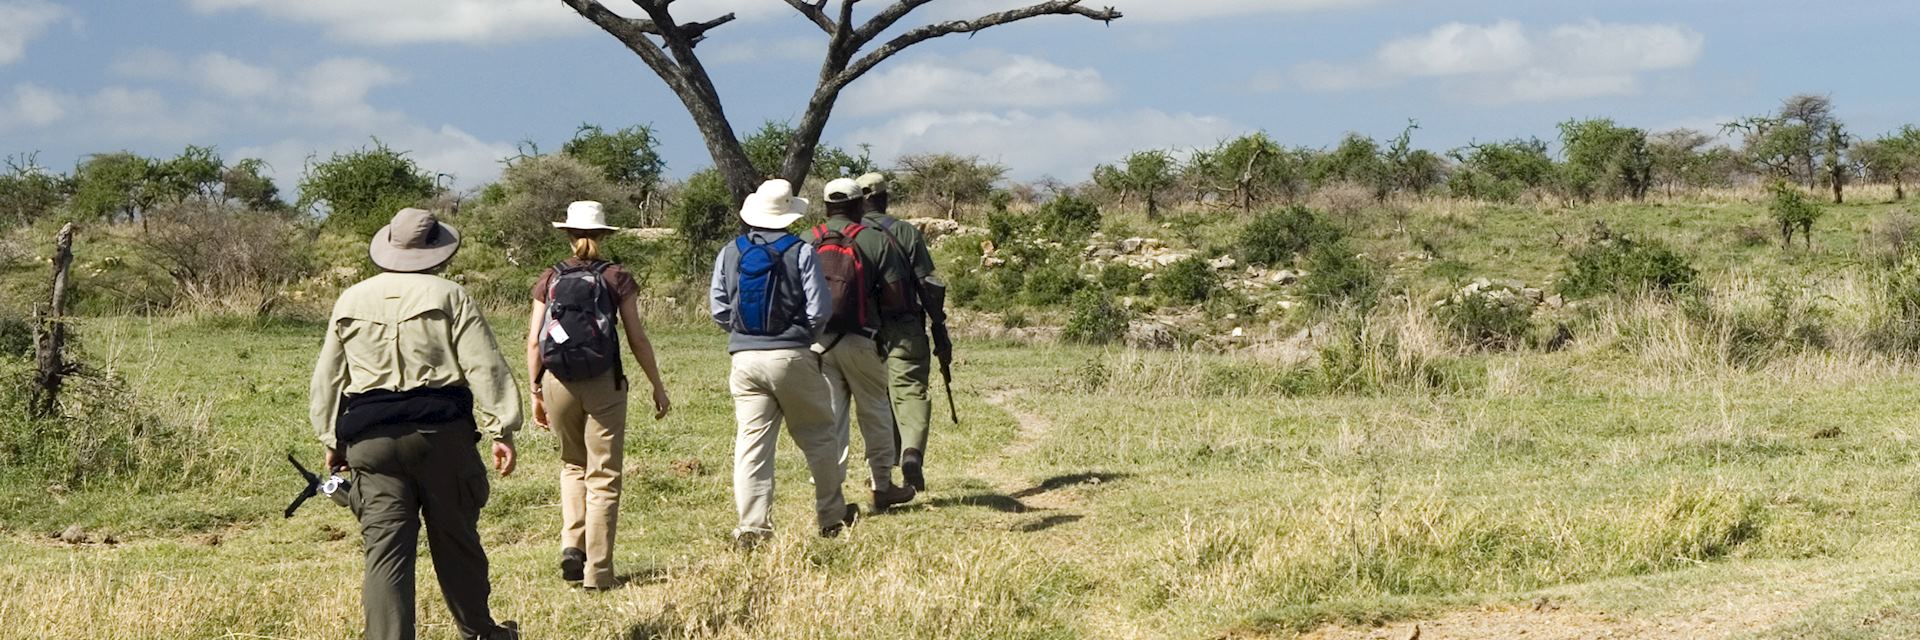 Walking safari in South Luangwa National Park